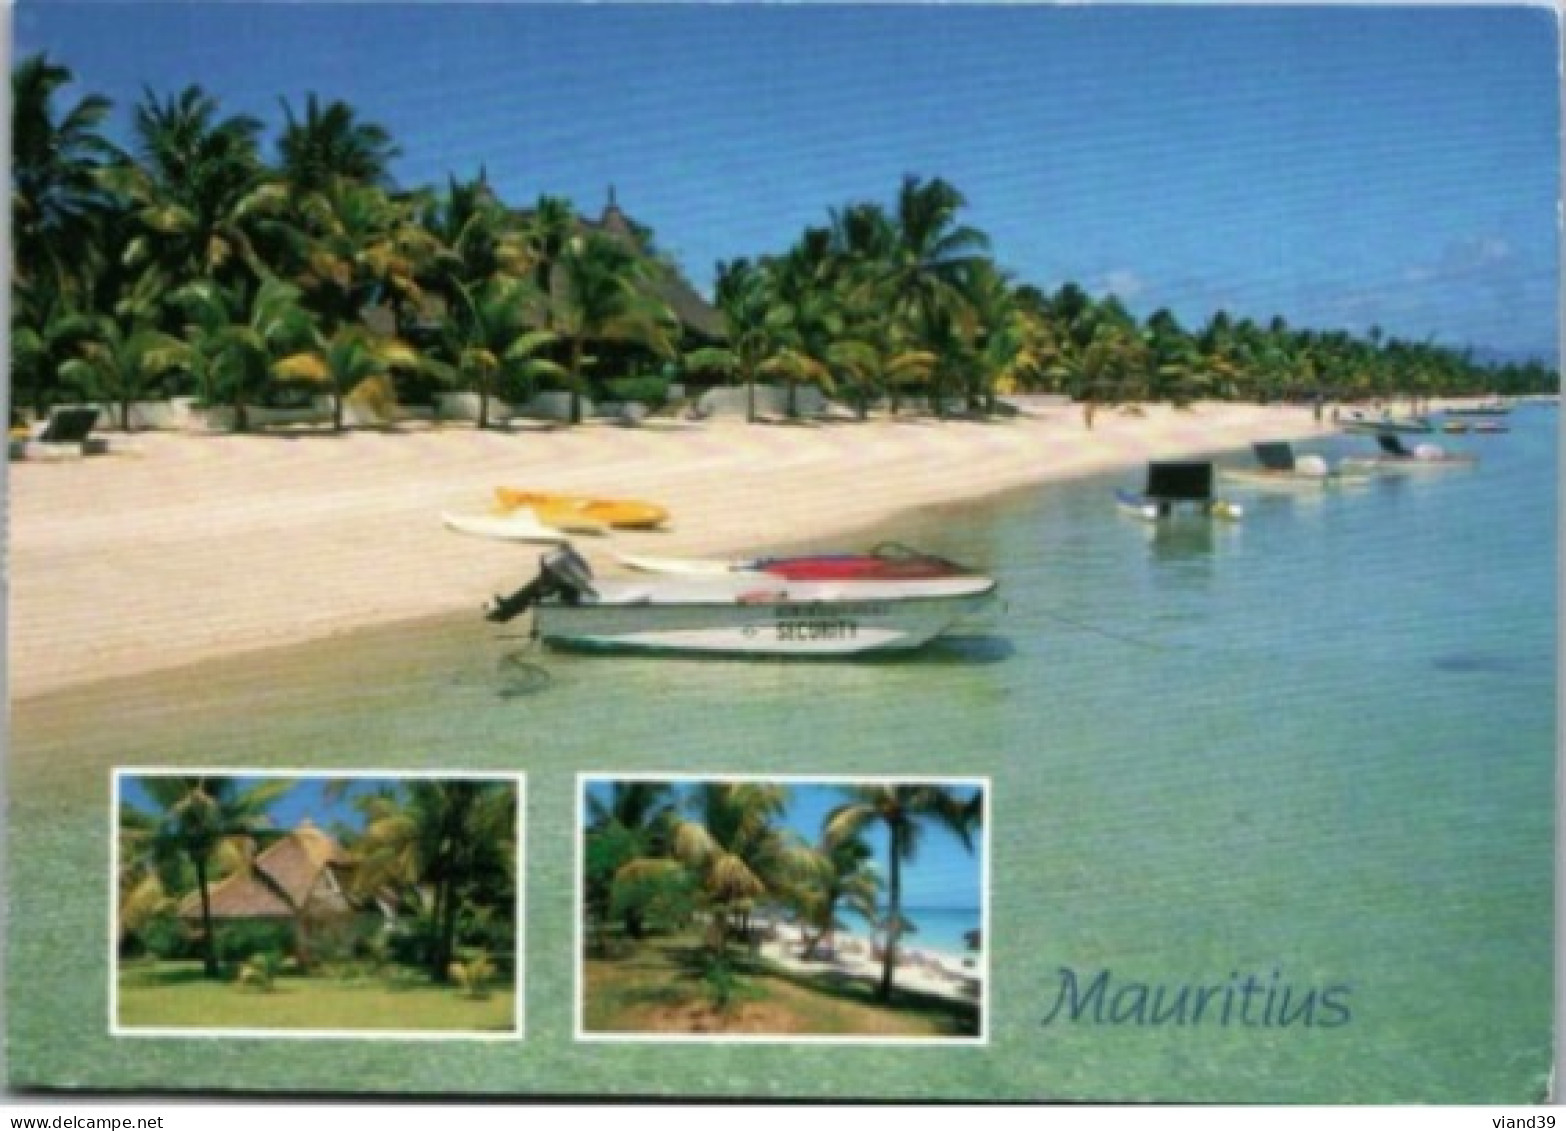 Maurice. -  MAURITIUS.   -  Trou Aux Biches   Timbres. - Mauritius